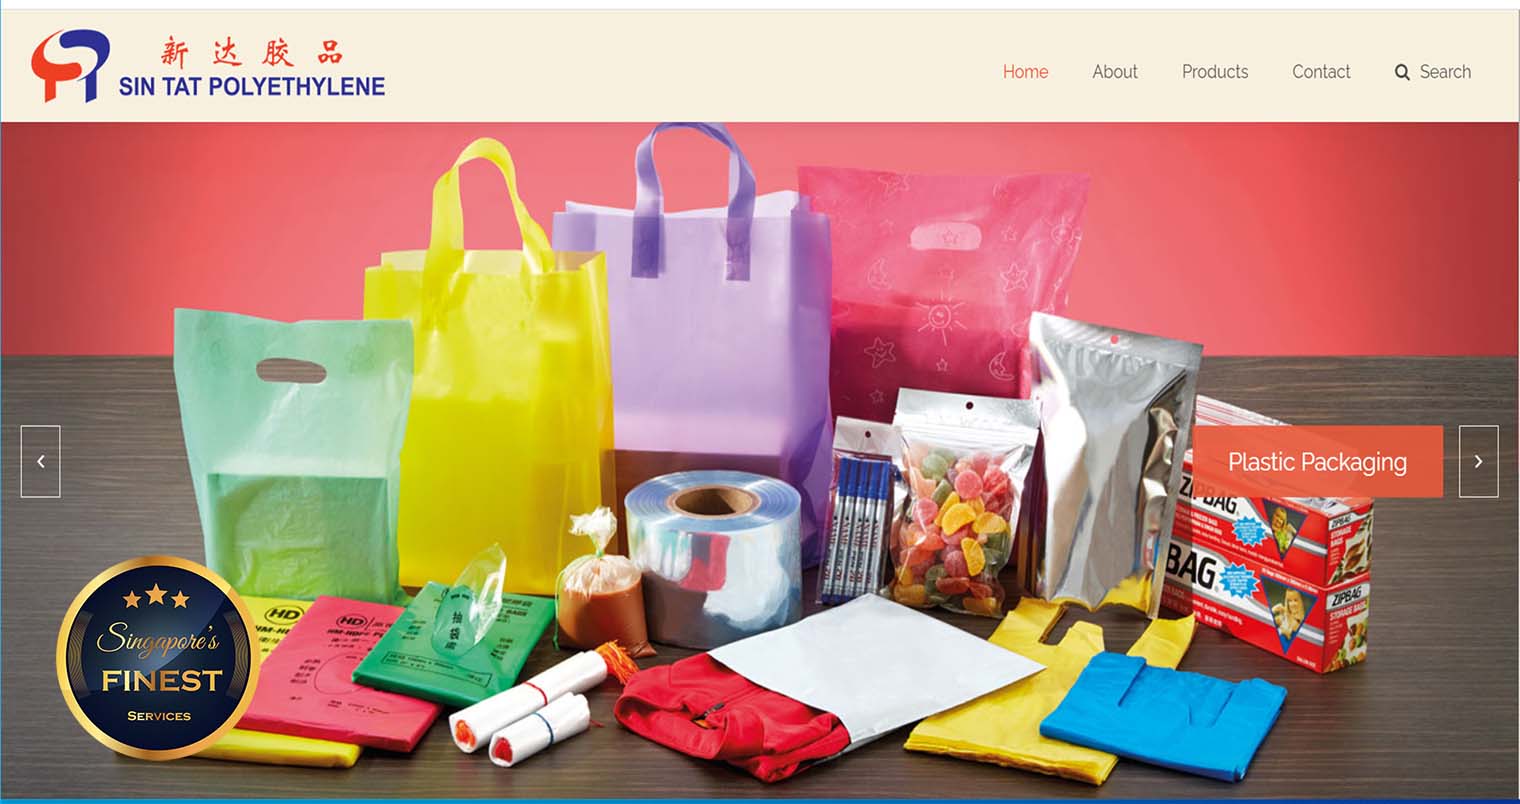 Sin Tat Polyethylene - Food Packaging Singapore